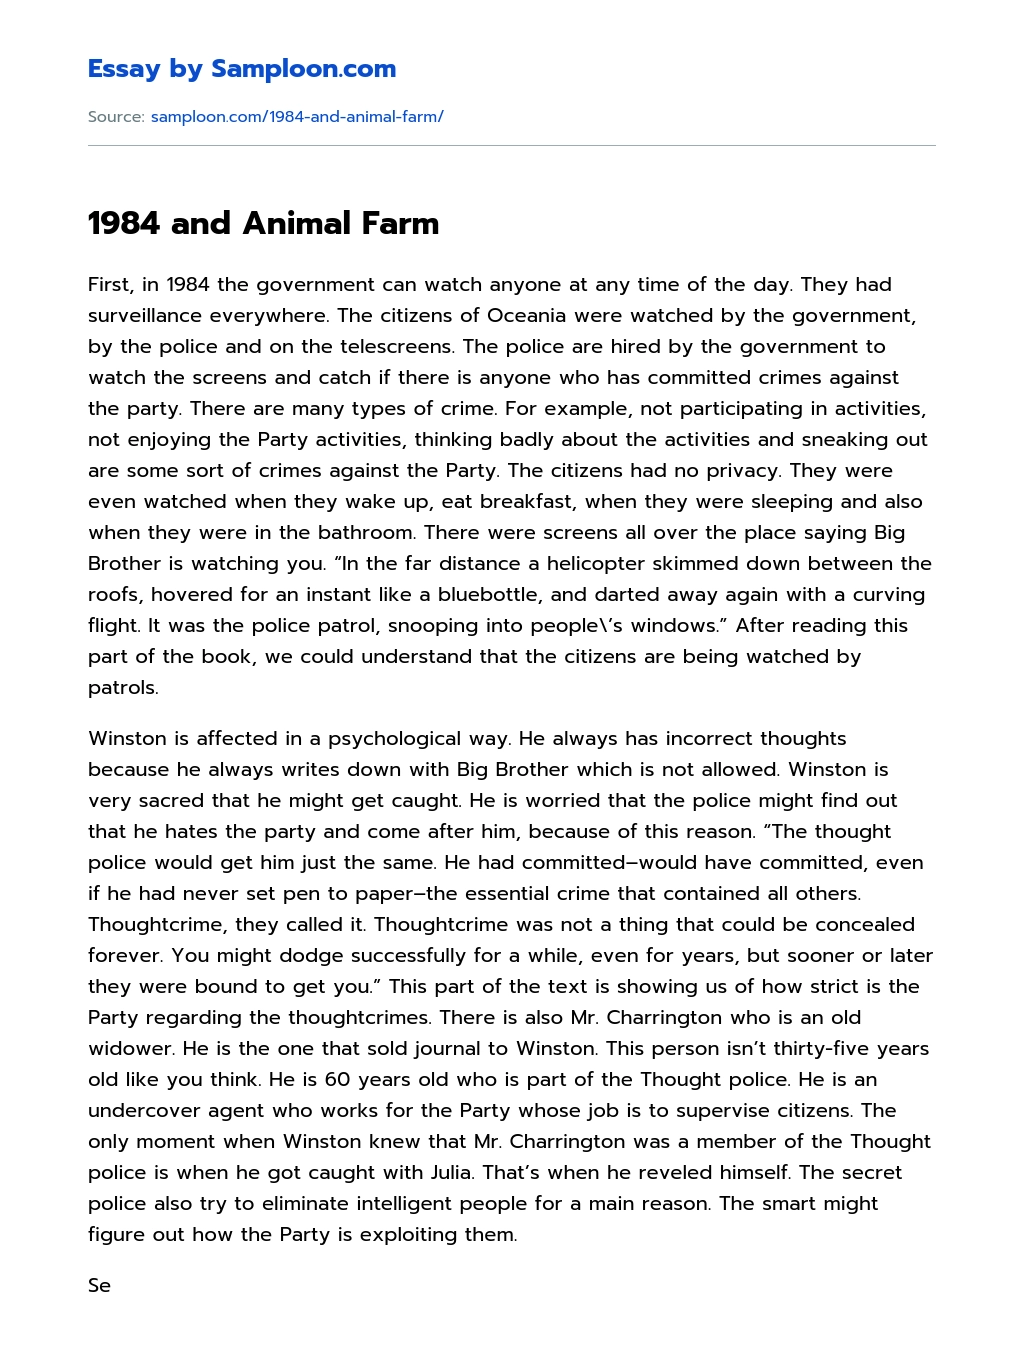 1984 and Animal Farm essay